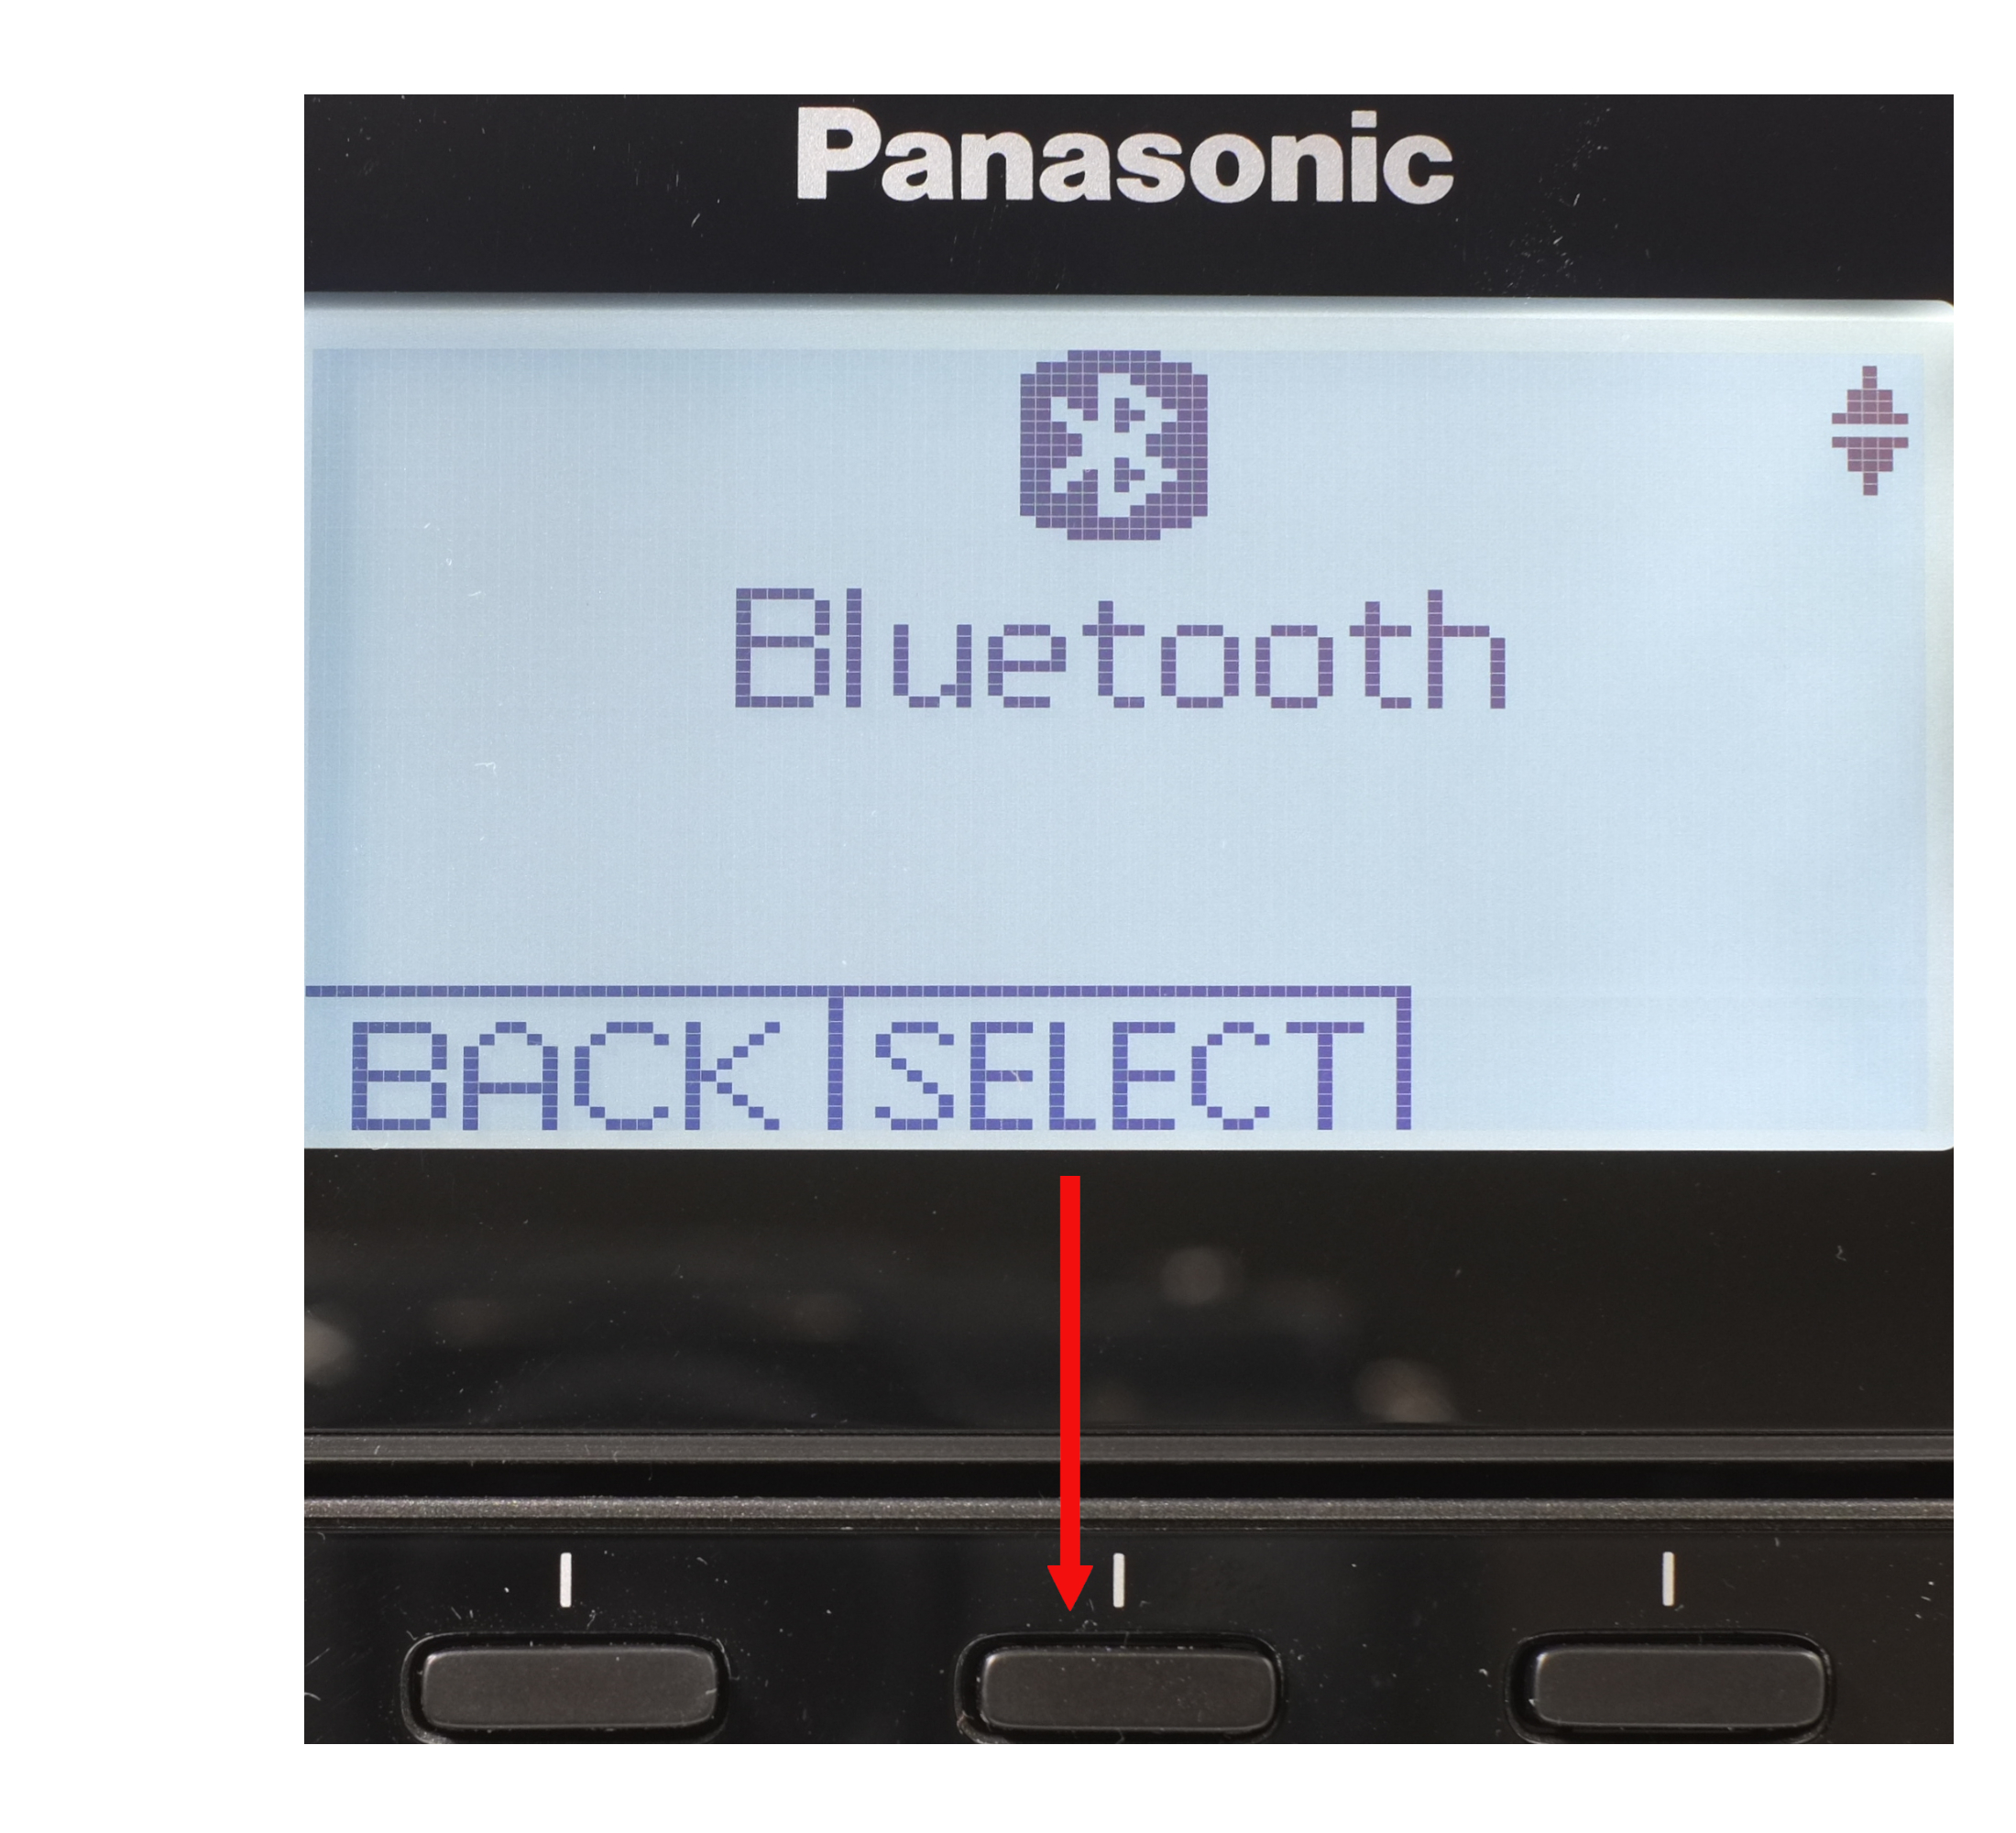 Panasonic phone Bluetooth setting 